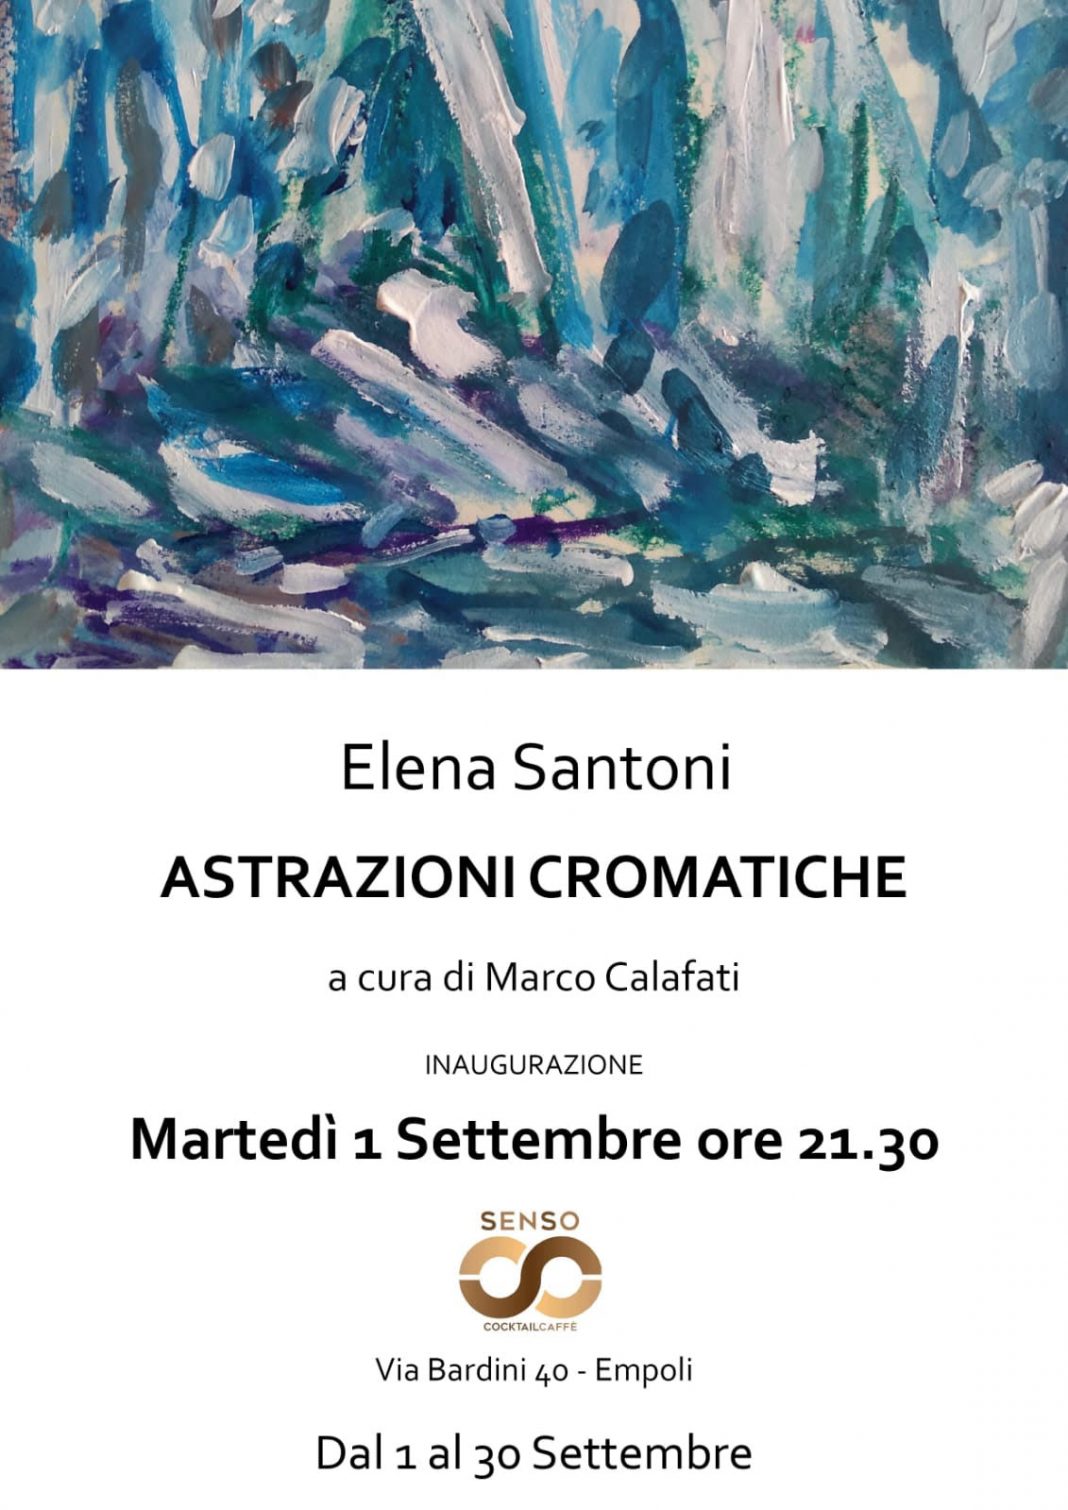 Elena Santoni – Astrazioni cromatichehttps://www.exibart.com/repository/media/formidable/11/unnamed-19-1068x1510.jpg